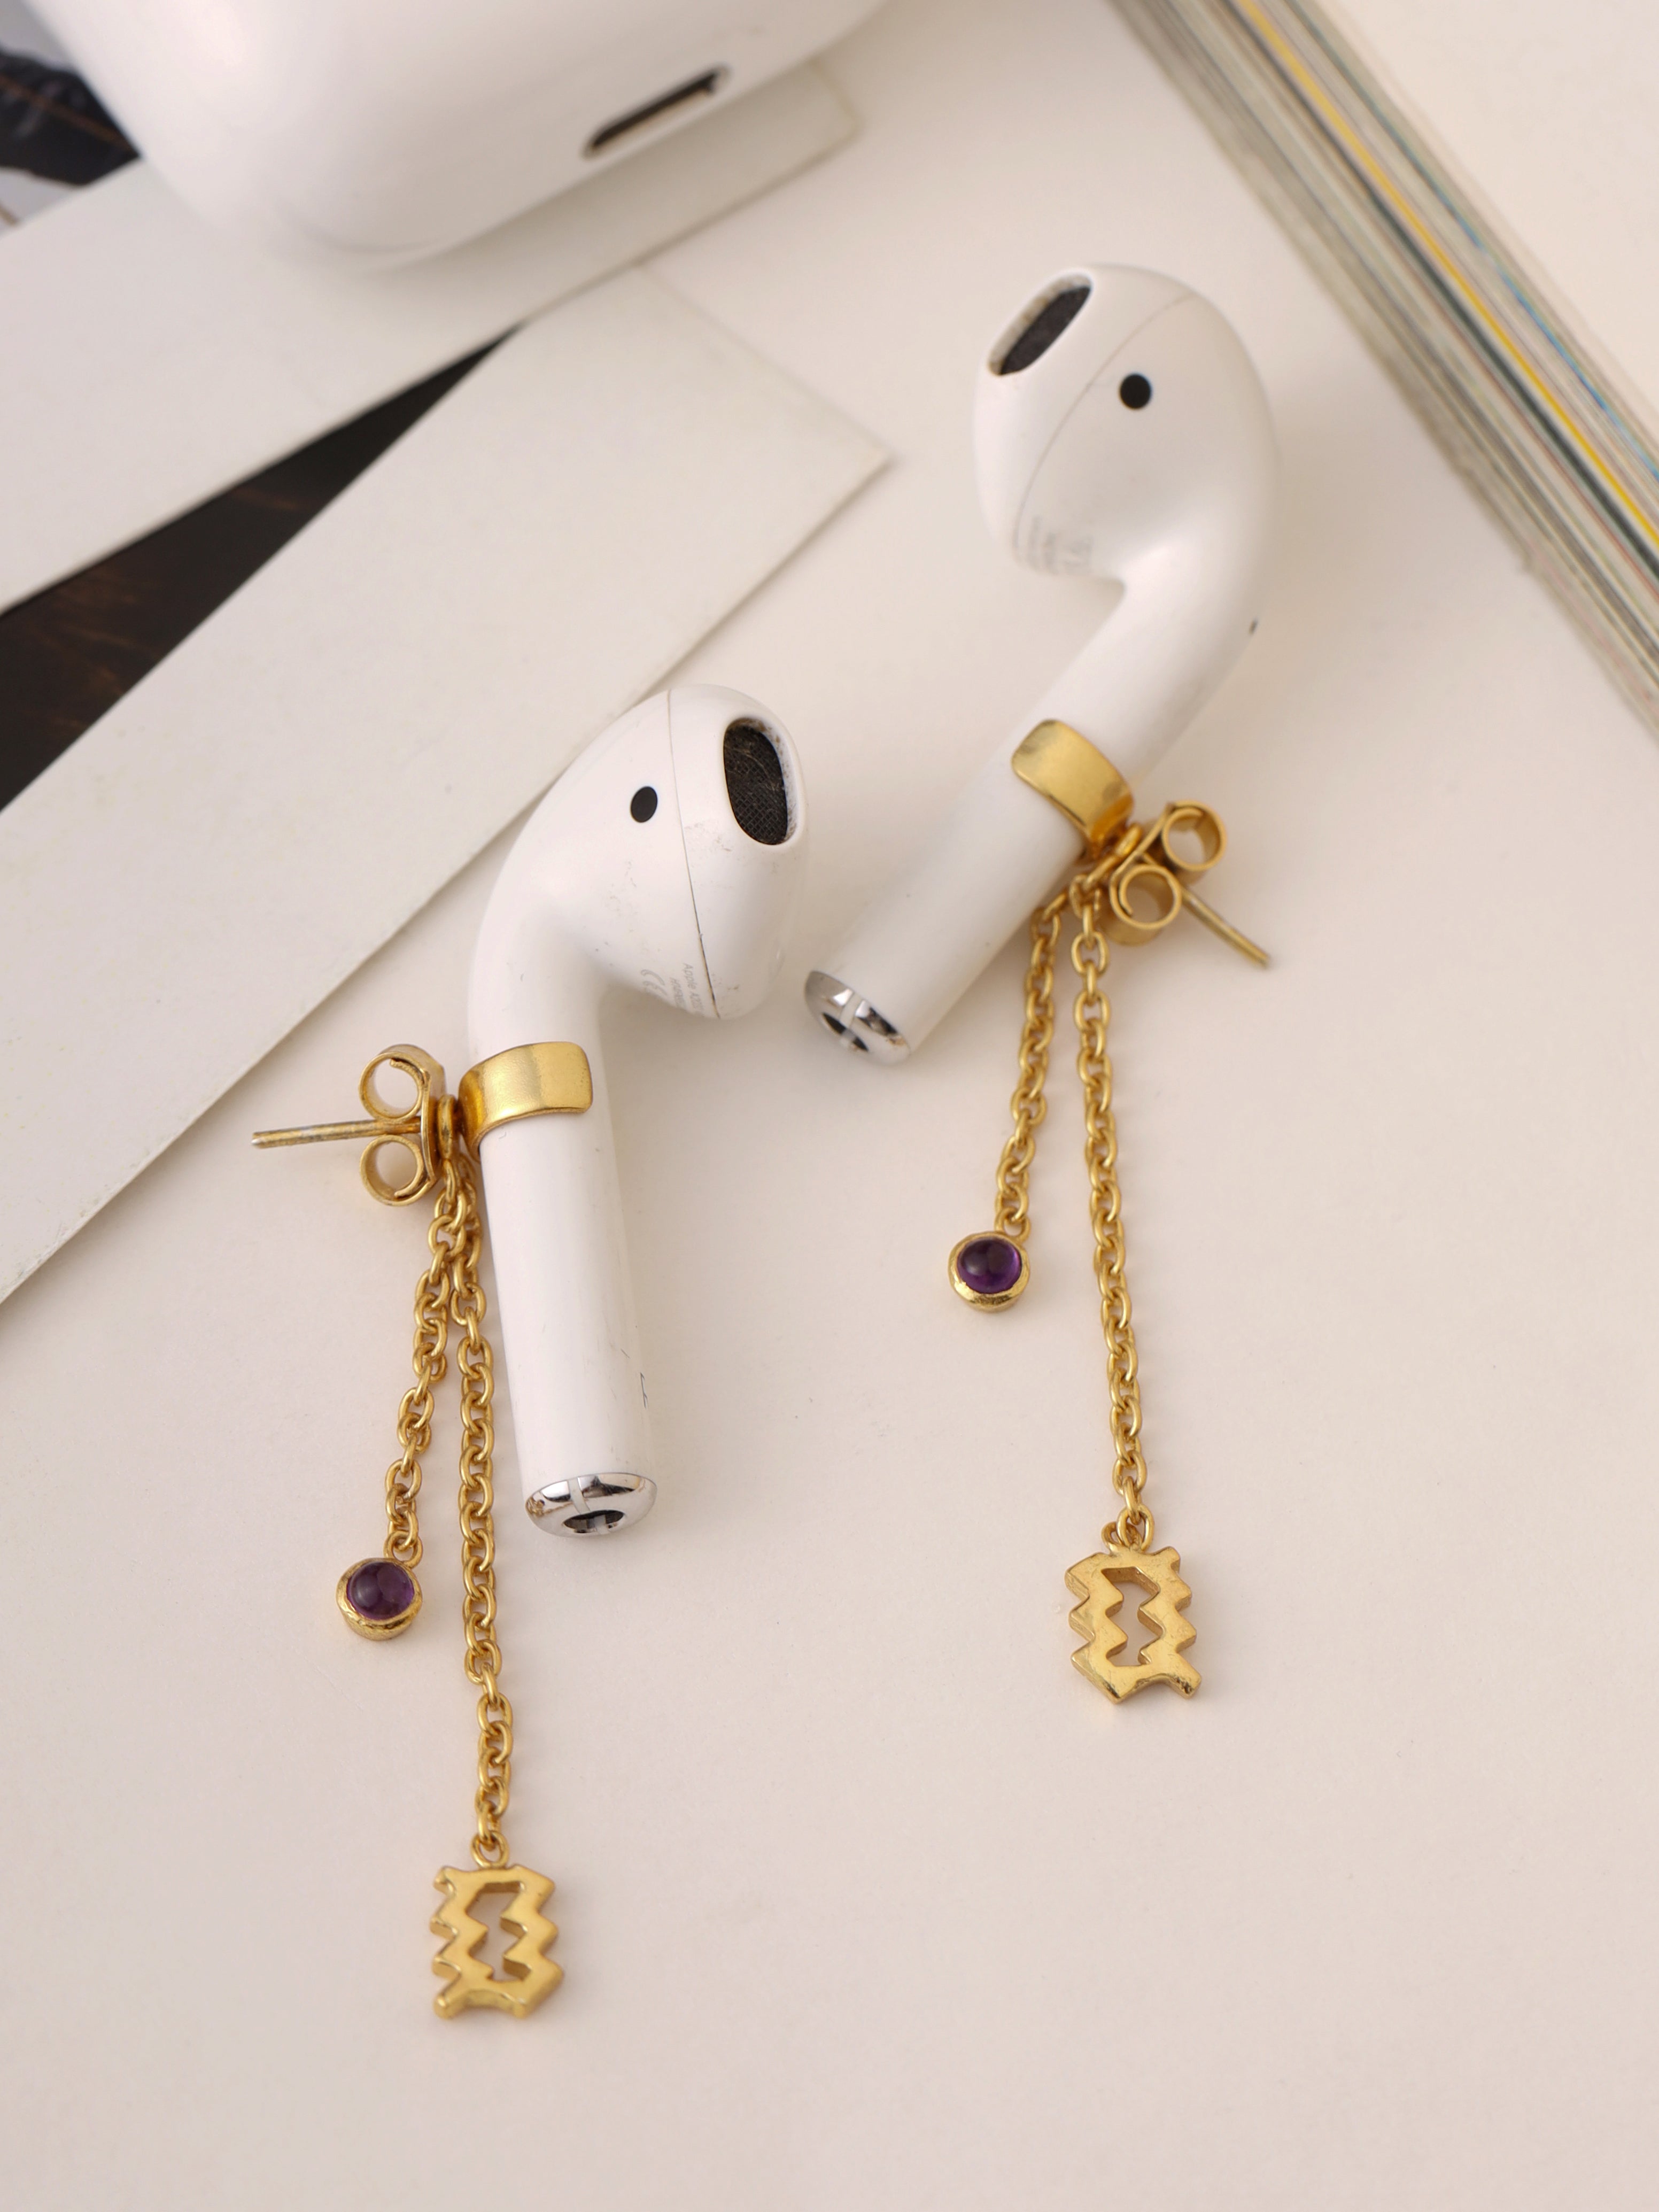 Aquarius Airpods earrings